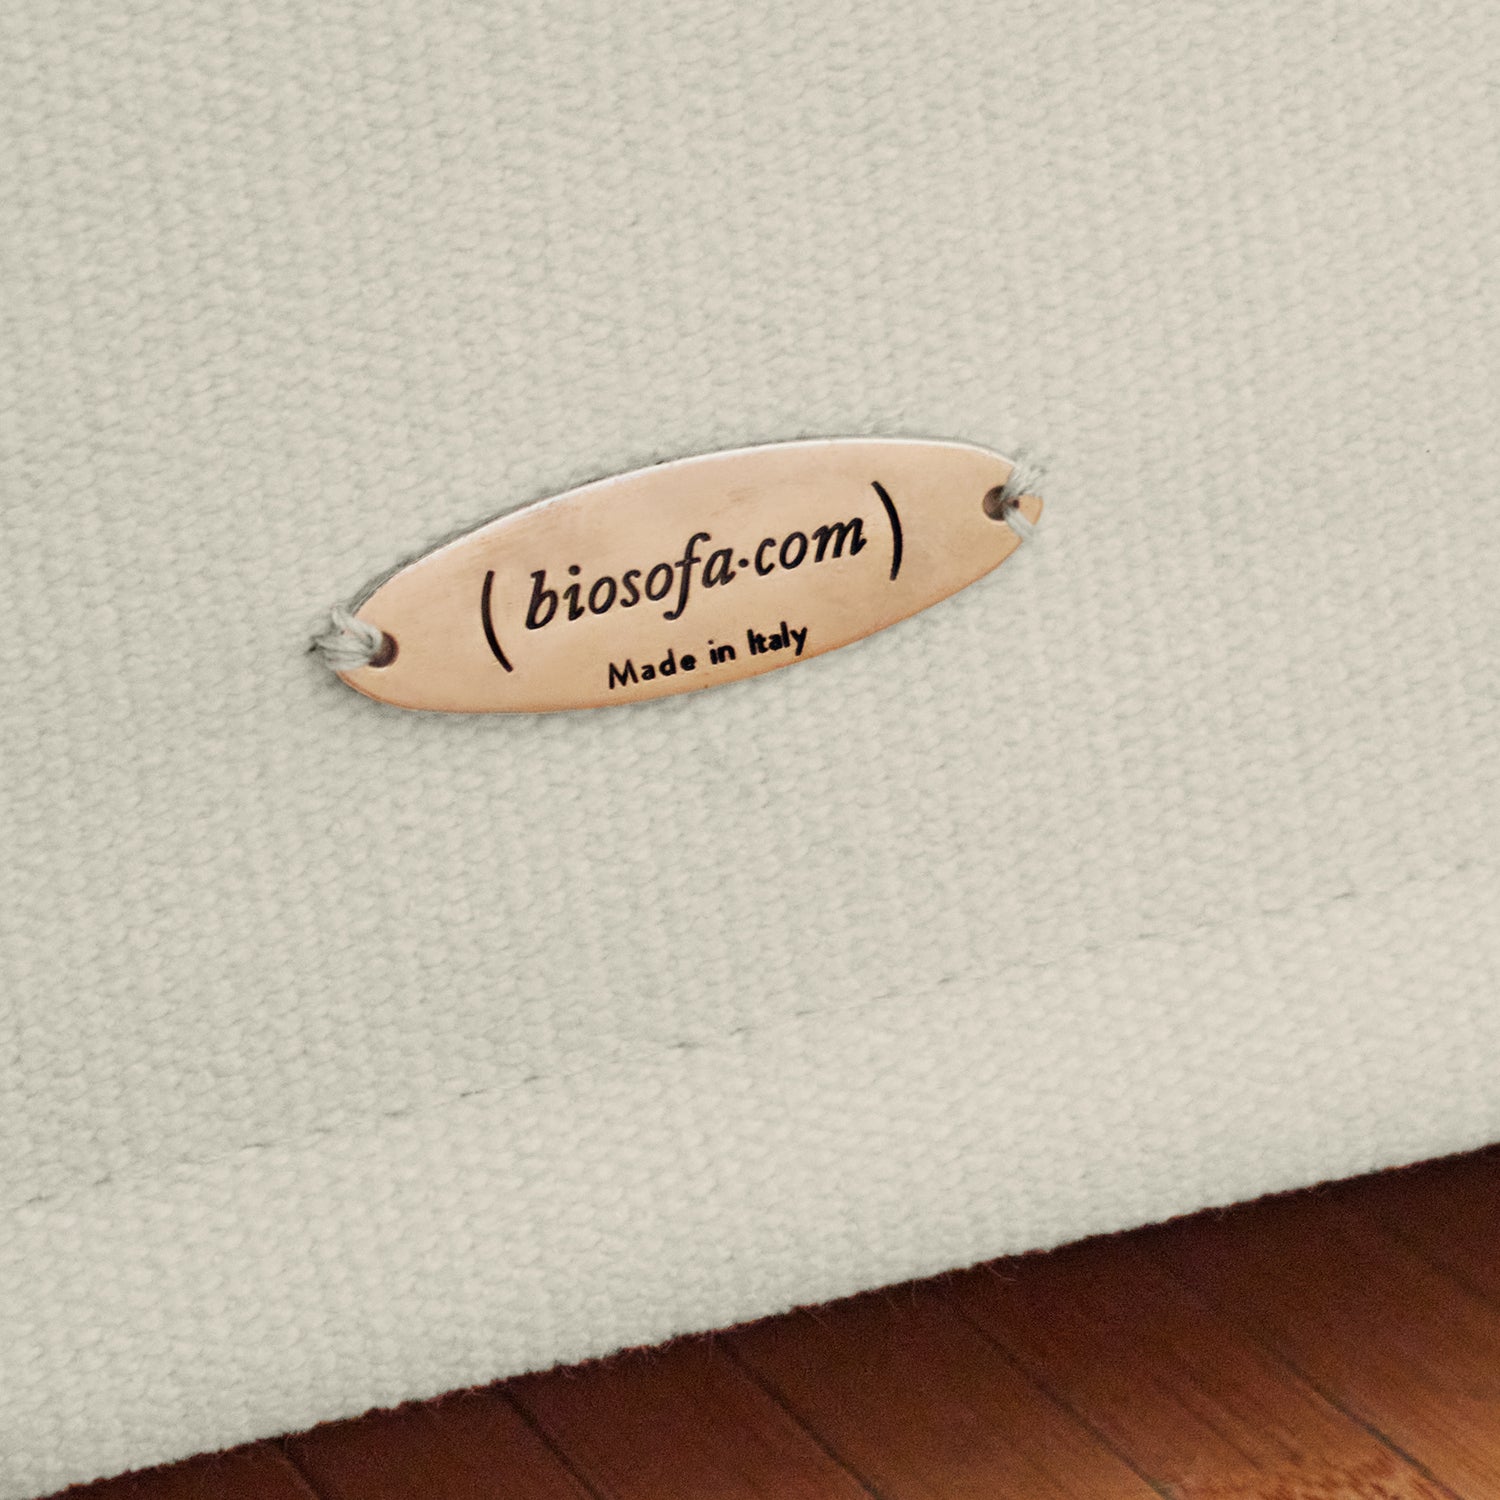 biosofa logo on luxurious sustainable sofa.